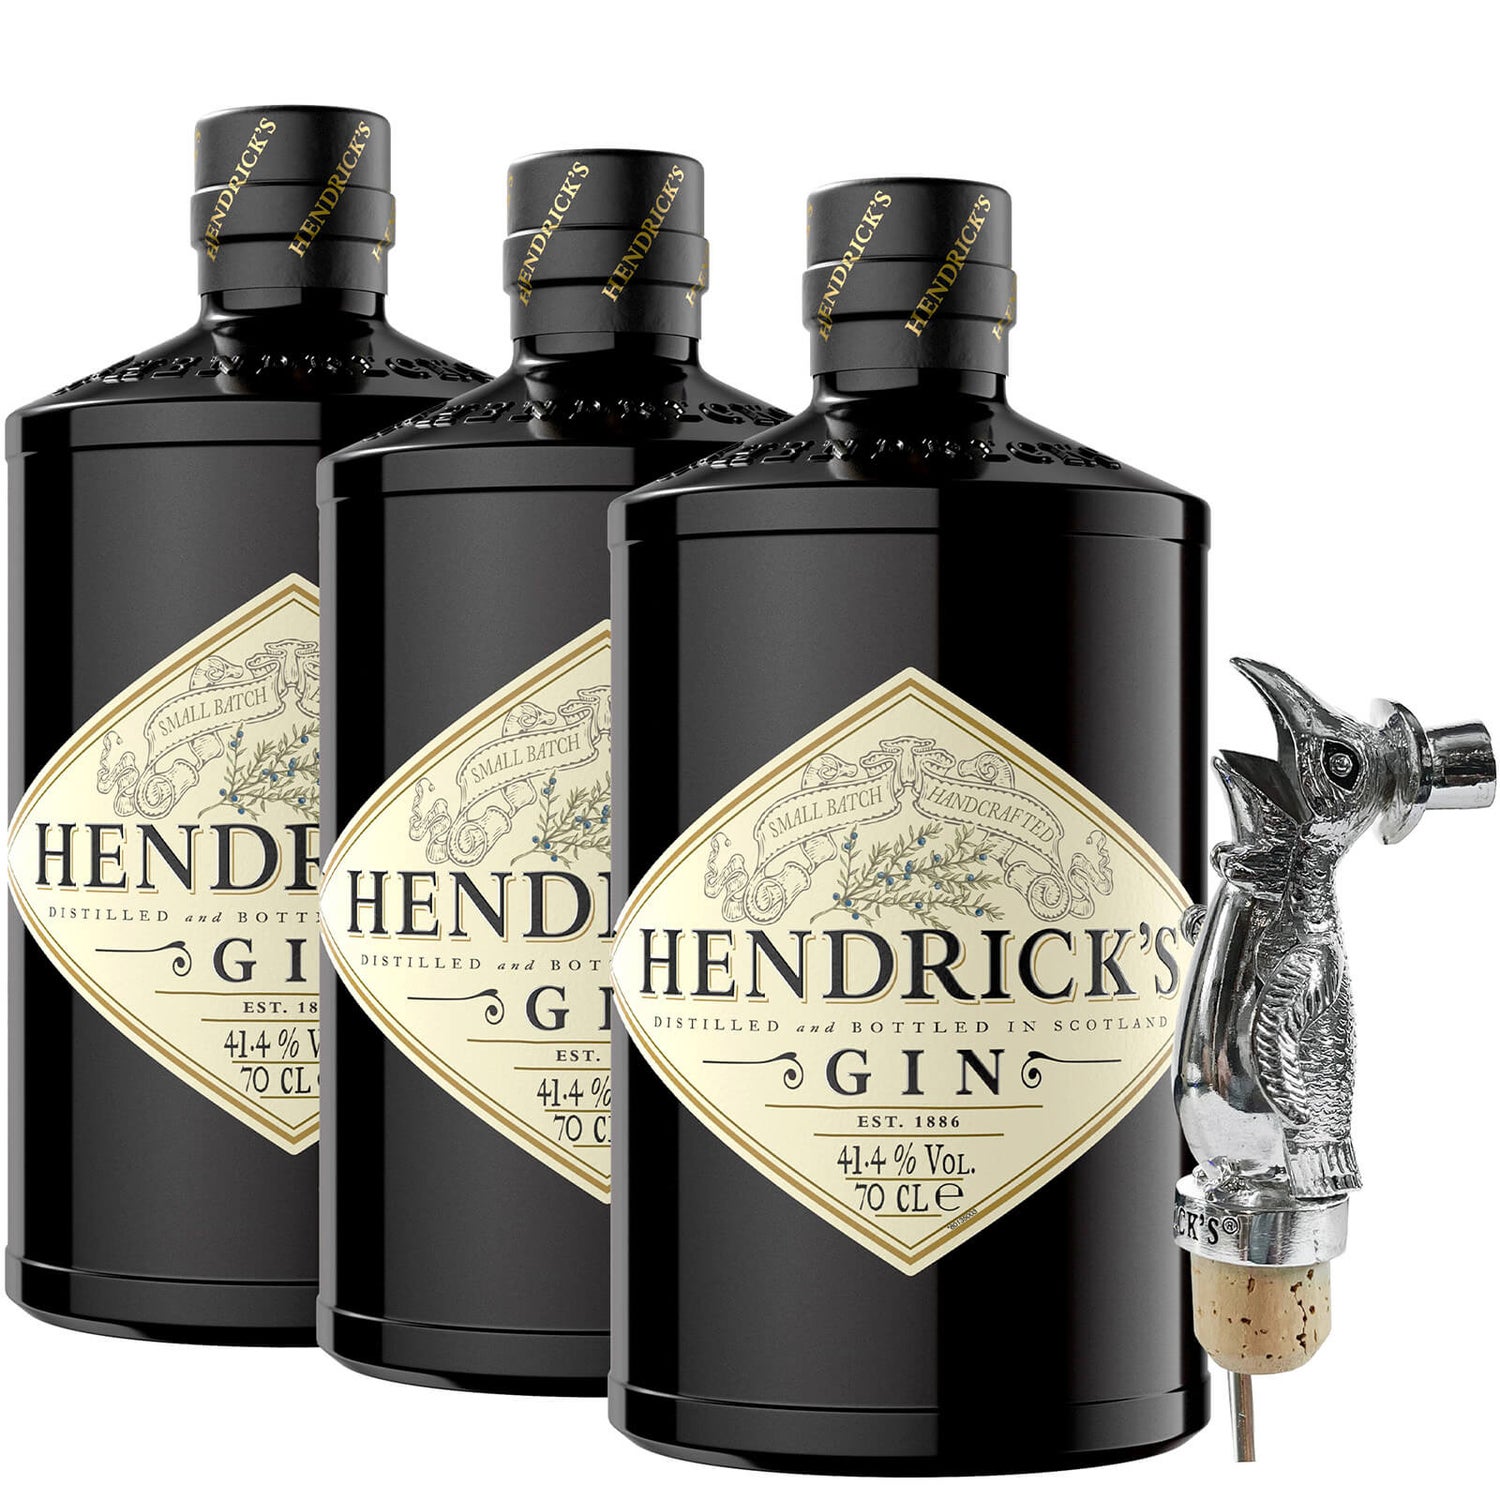 Hendrick's Original Gin Trio with Exclusive Hendrick's Penguin Pourer